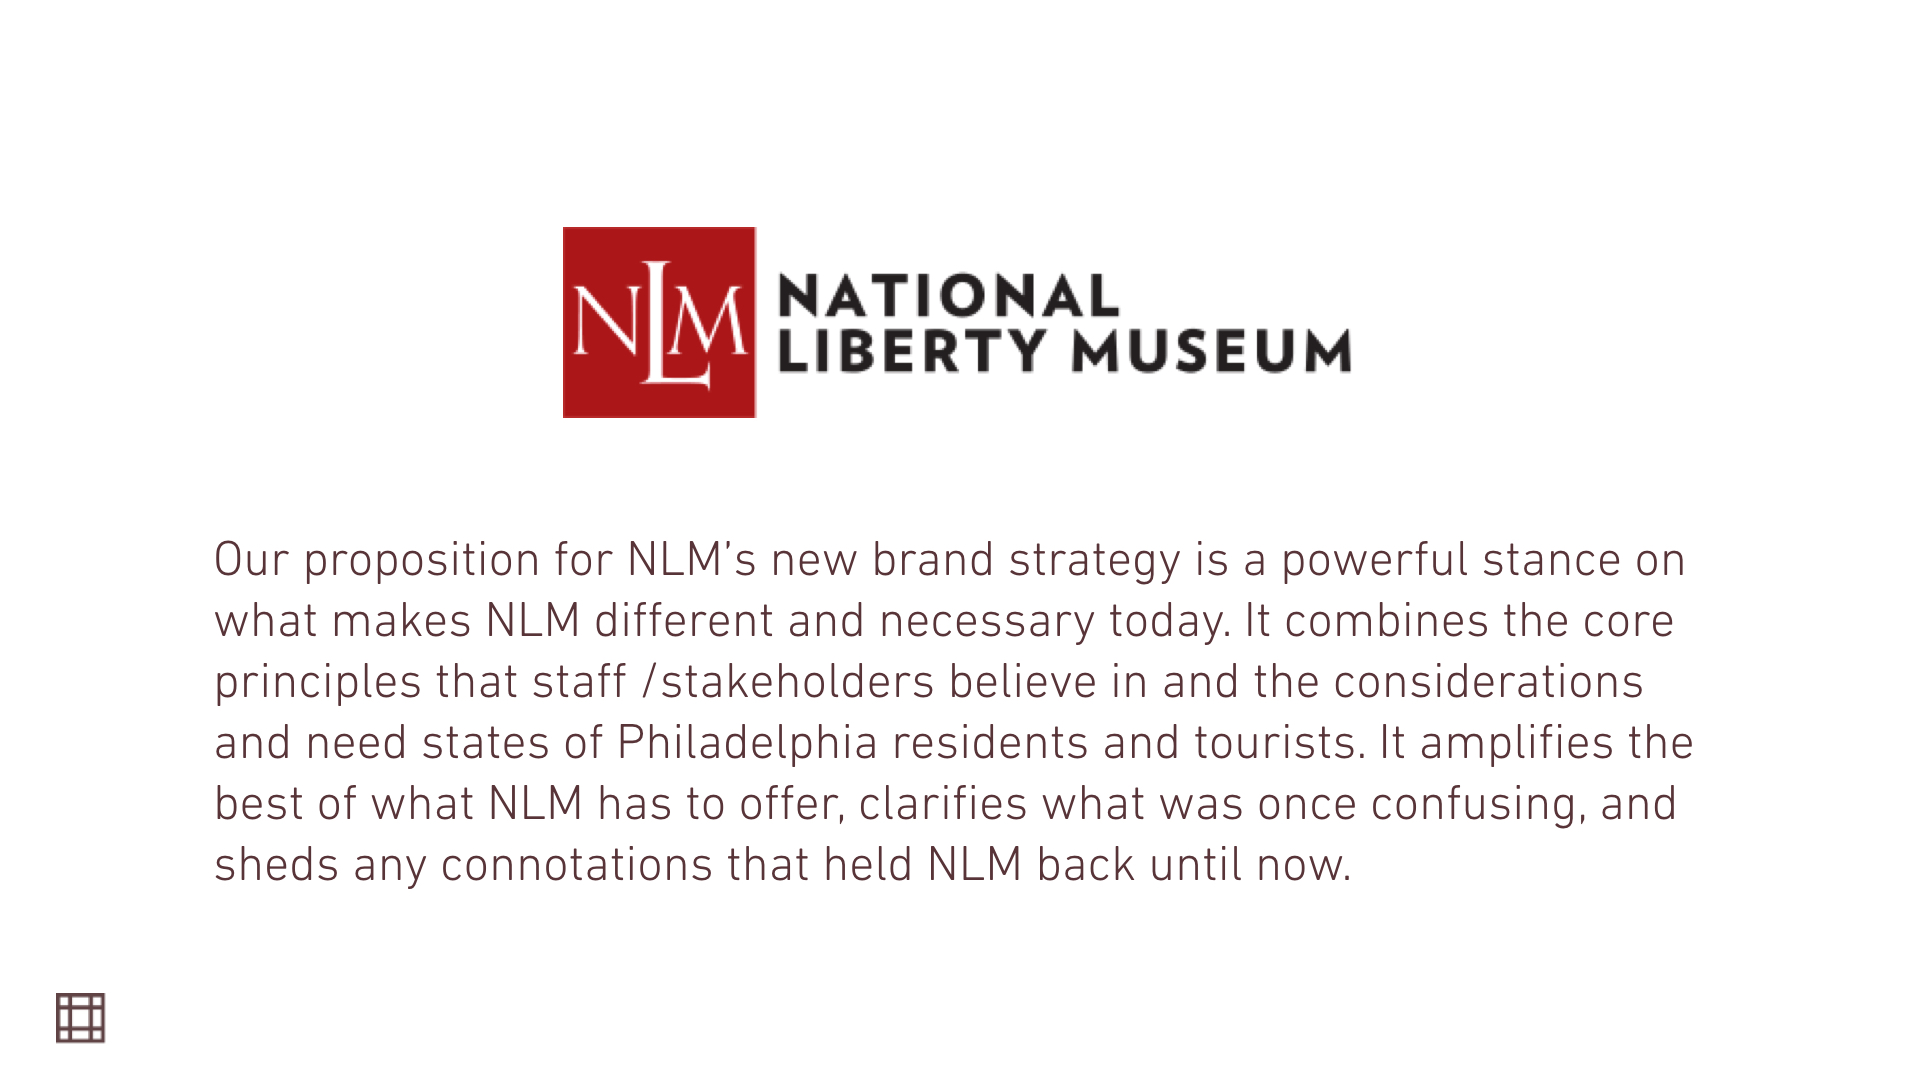 National Liberty Museum Brand Strategy Final Presentation Images.036.jpeg